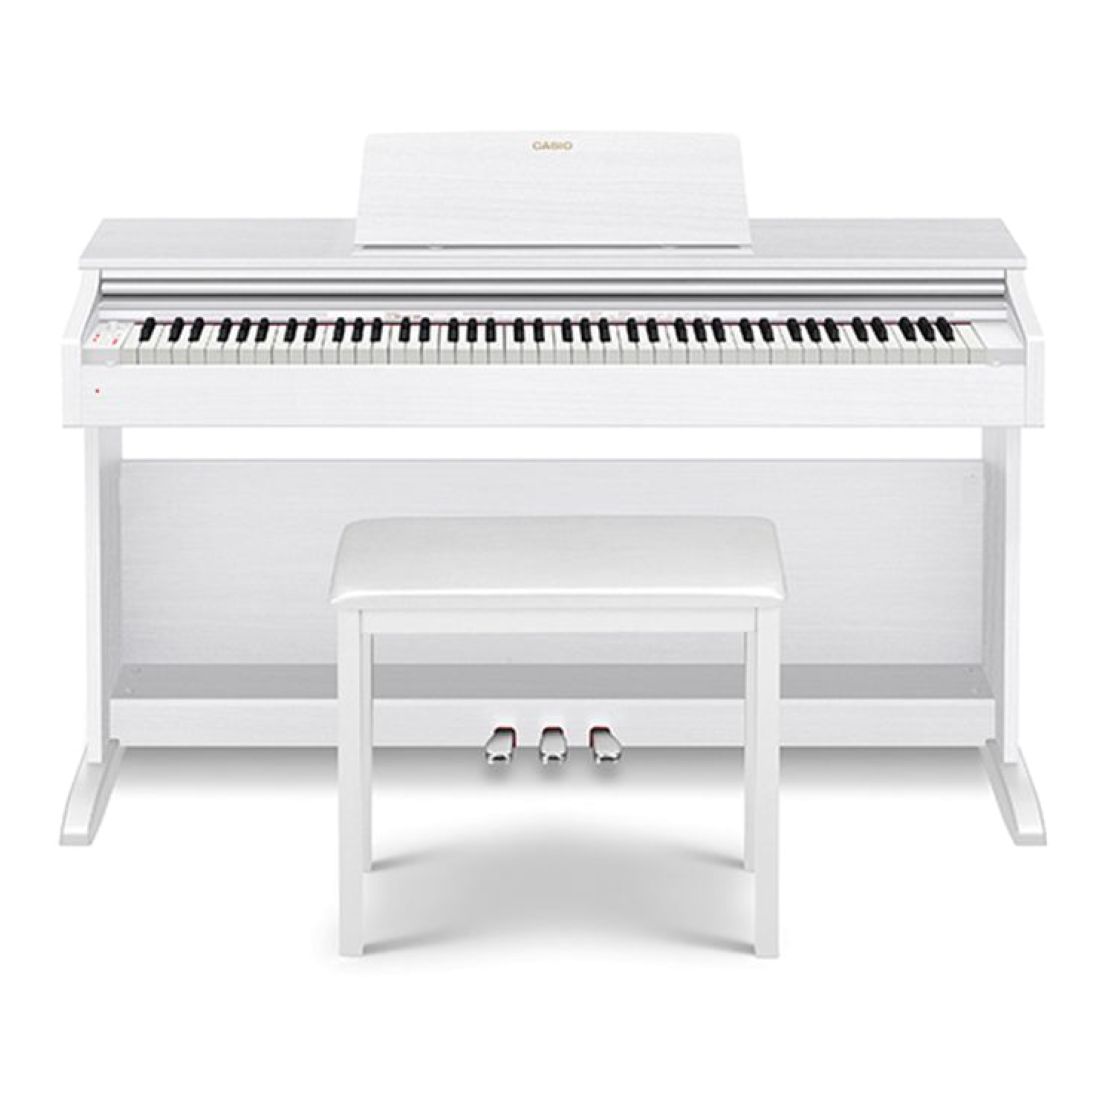 Casio AP-270 Celvanio 88-Key Digital Piano with Bench - White